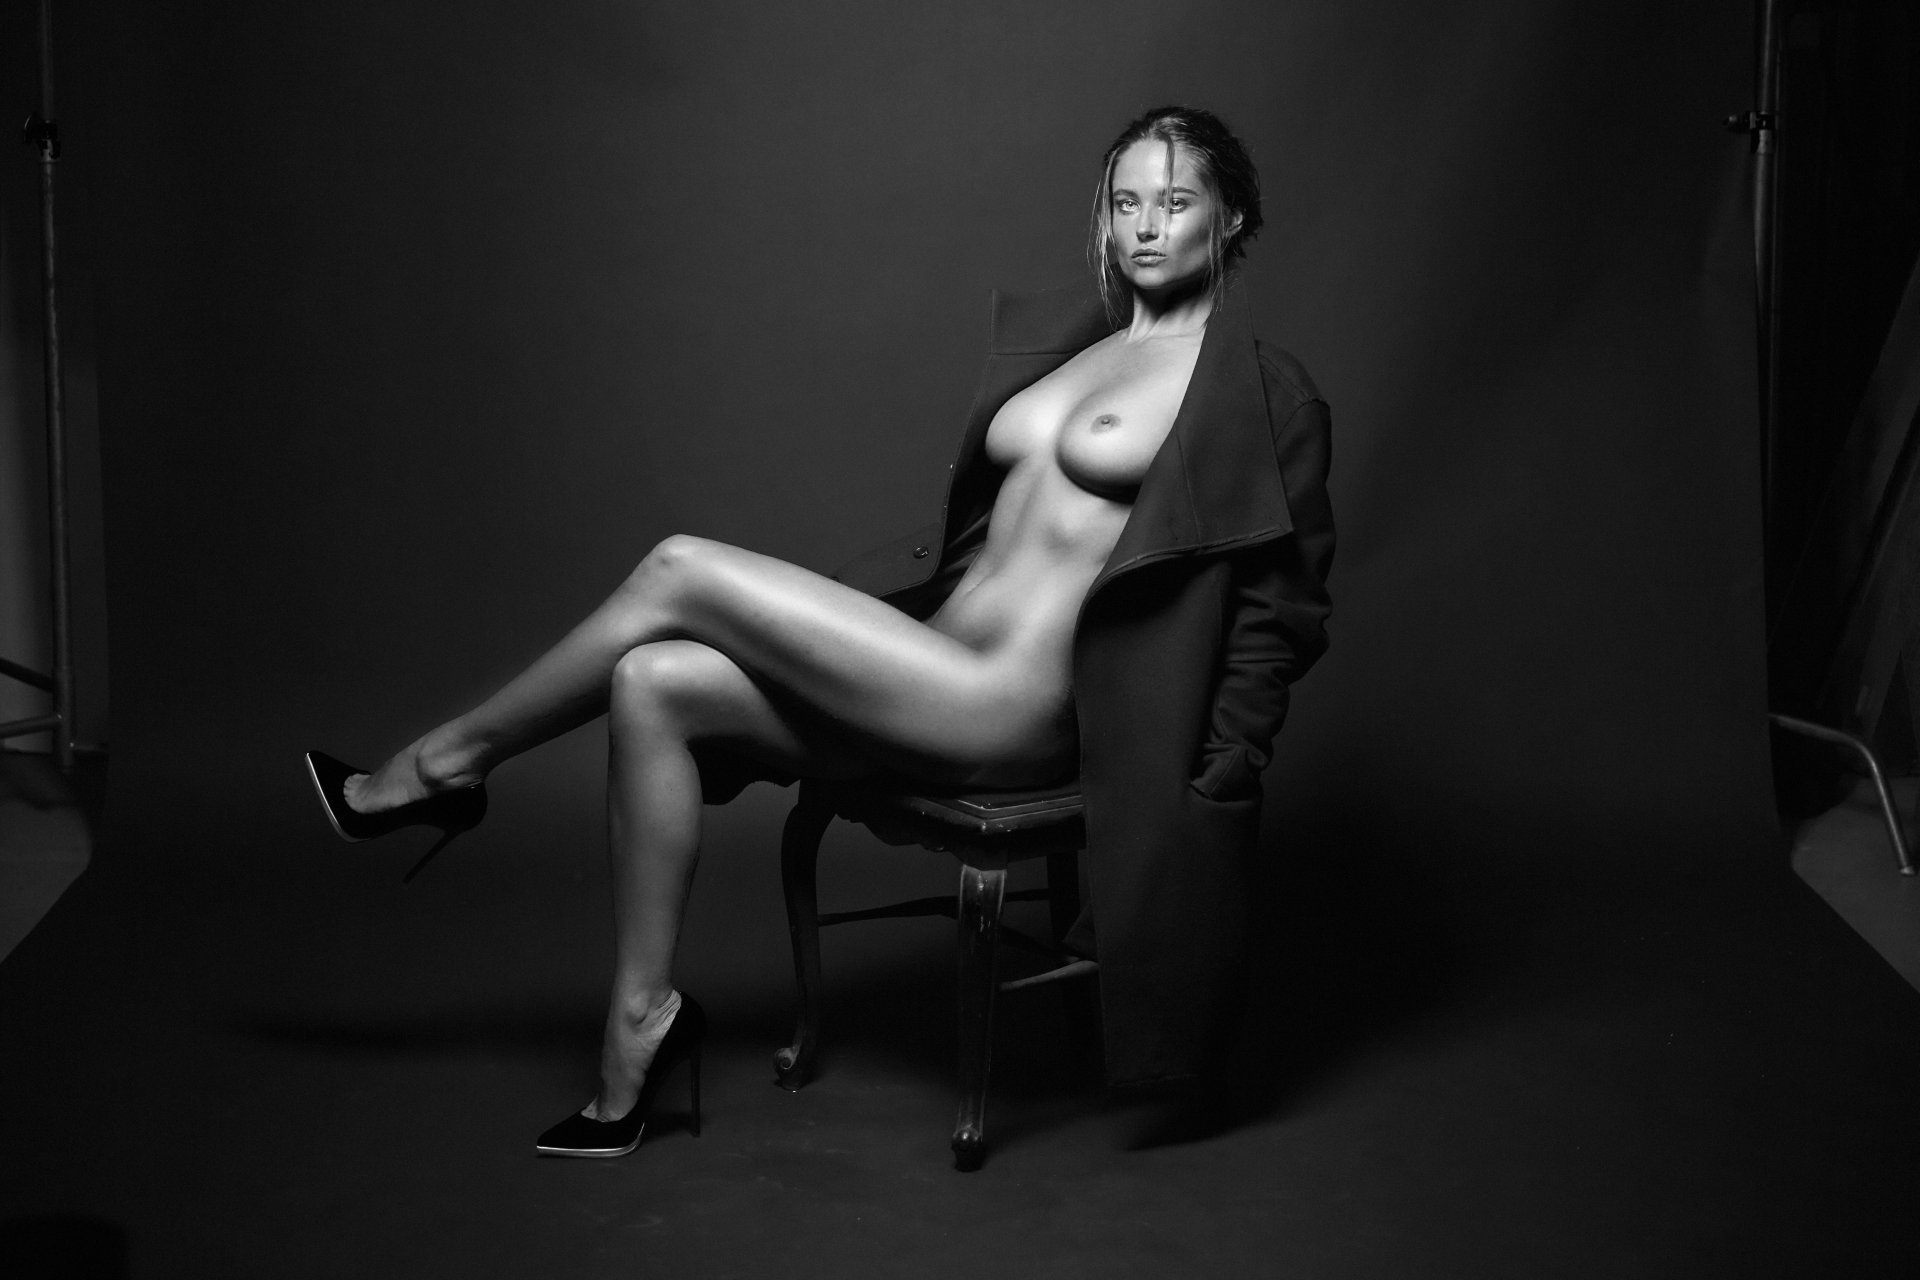 Bill Morton Photography Nude